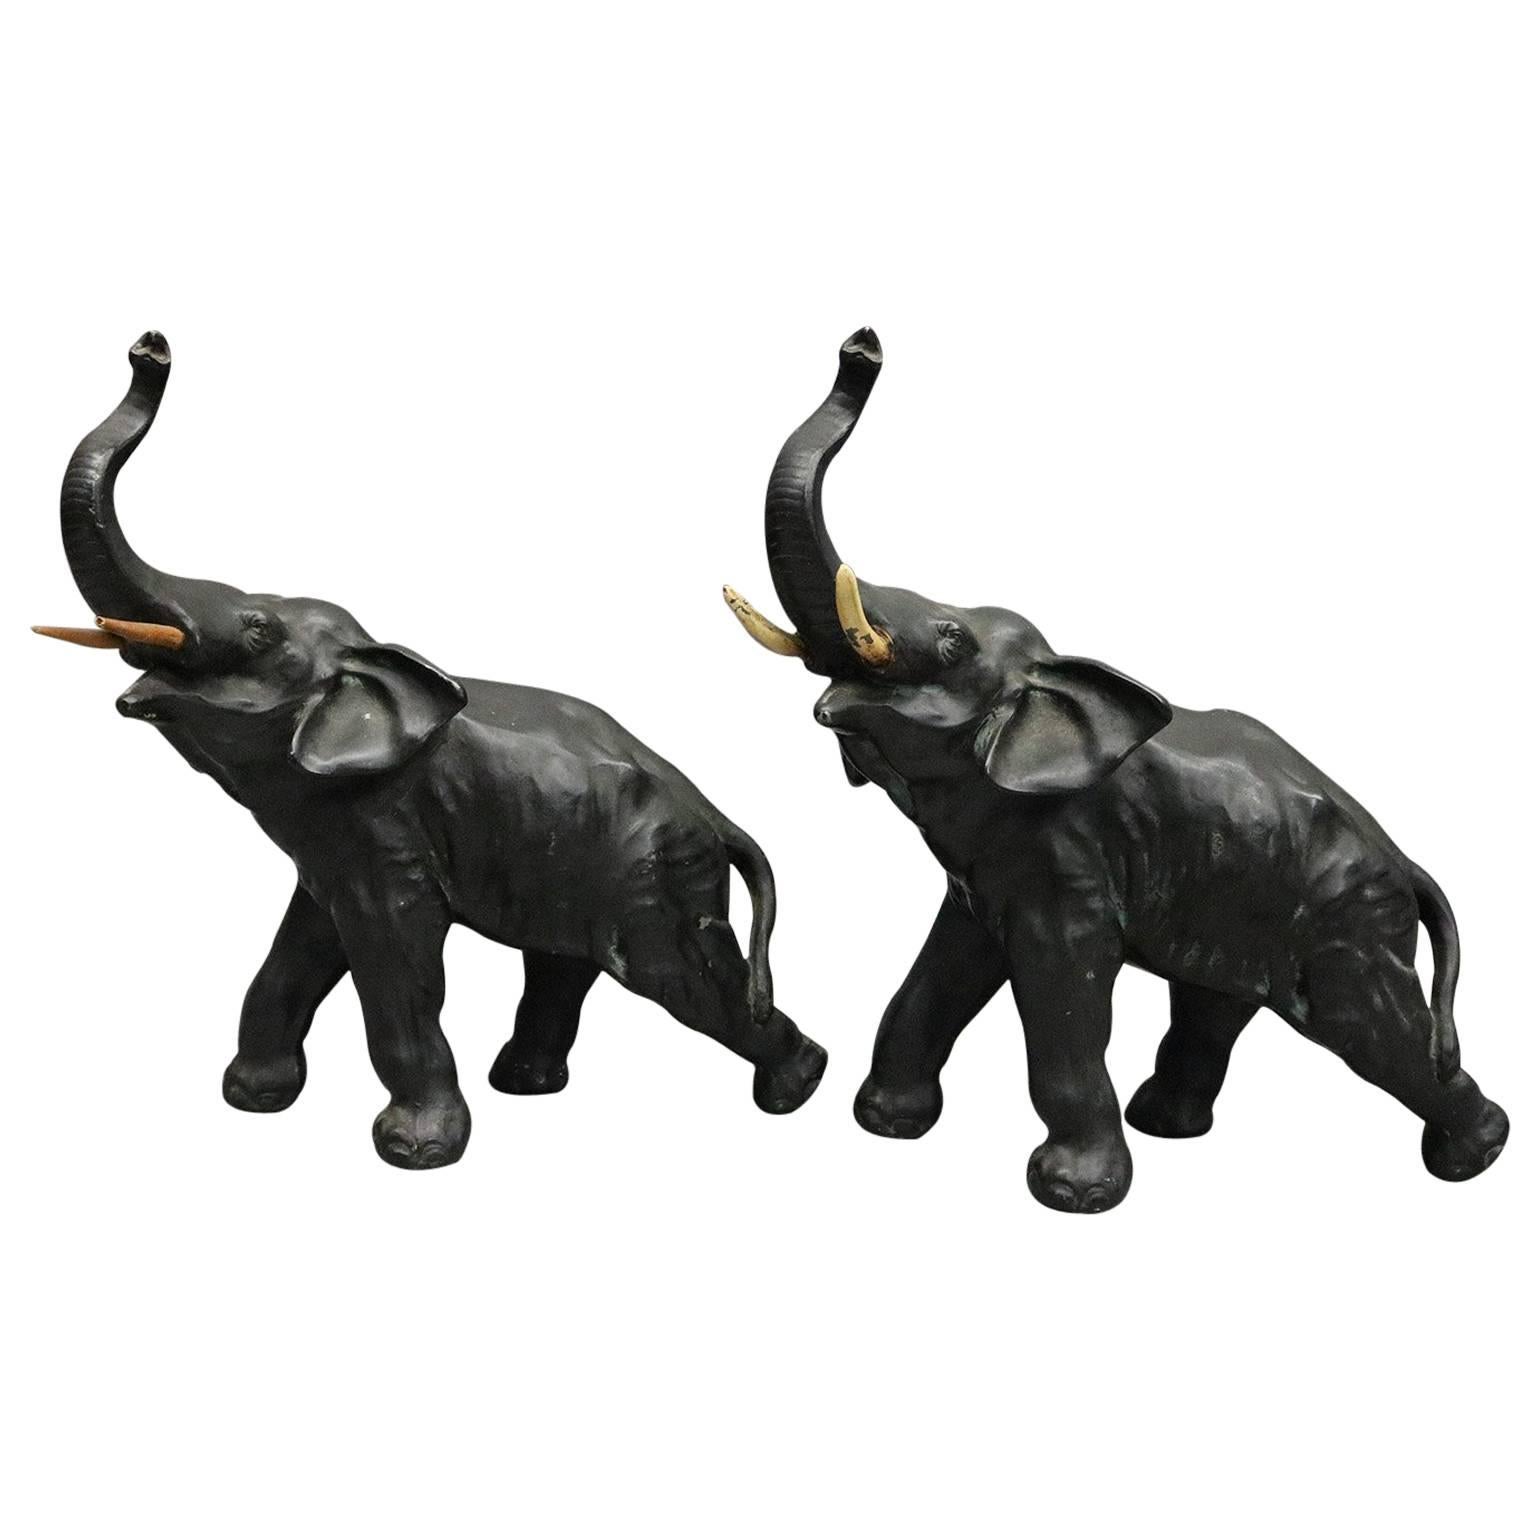 Pair Antique Bronzed Asian Bull Elephants in Motion, circa 1900